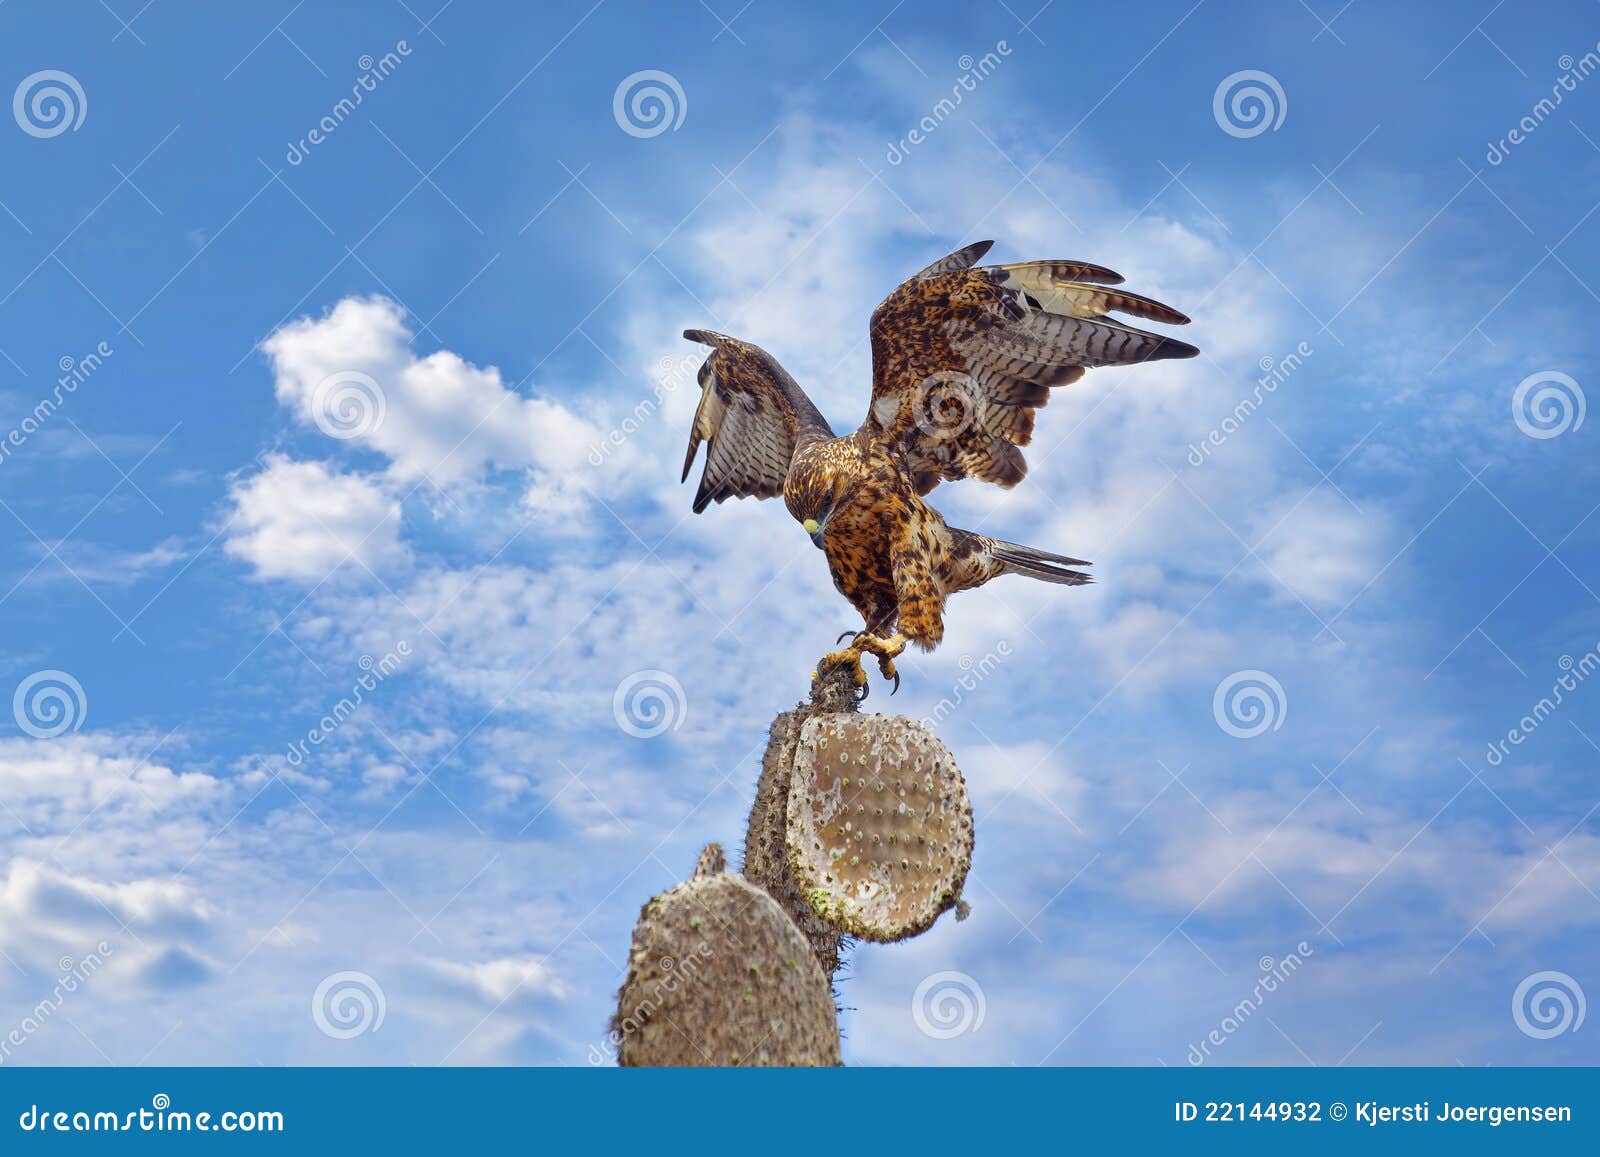 galapagos hawk on santa fe